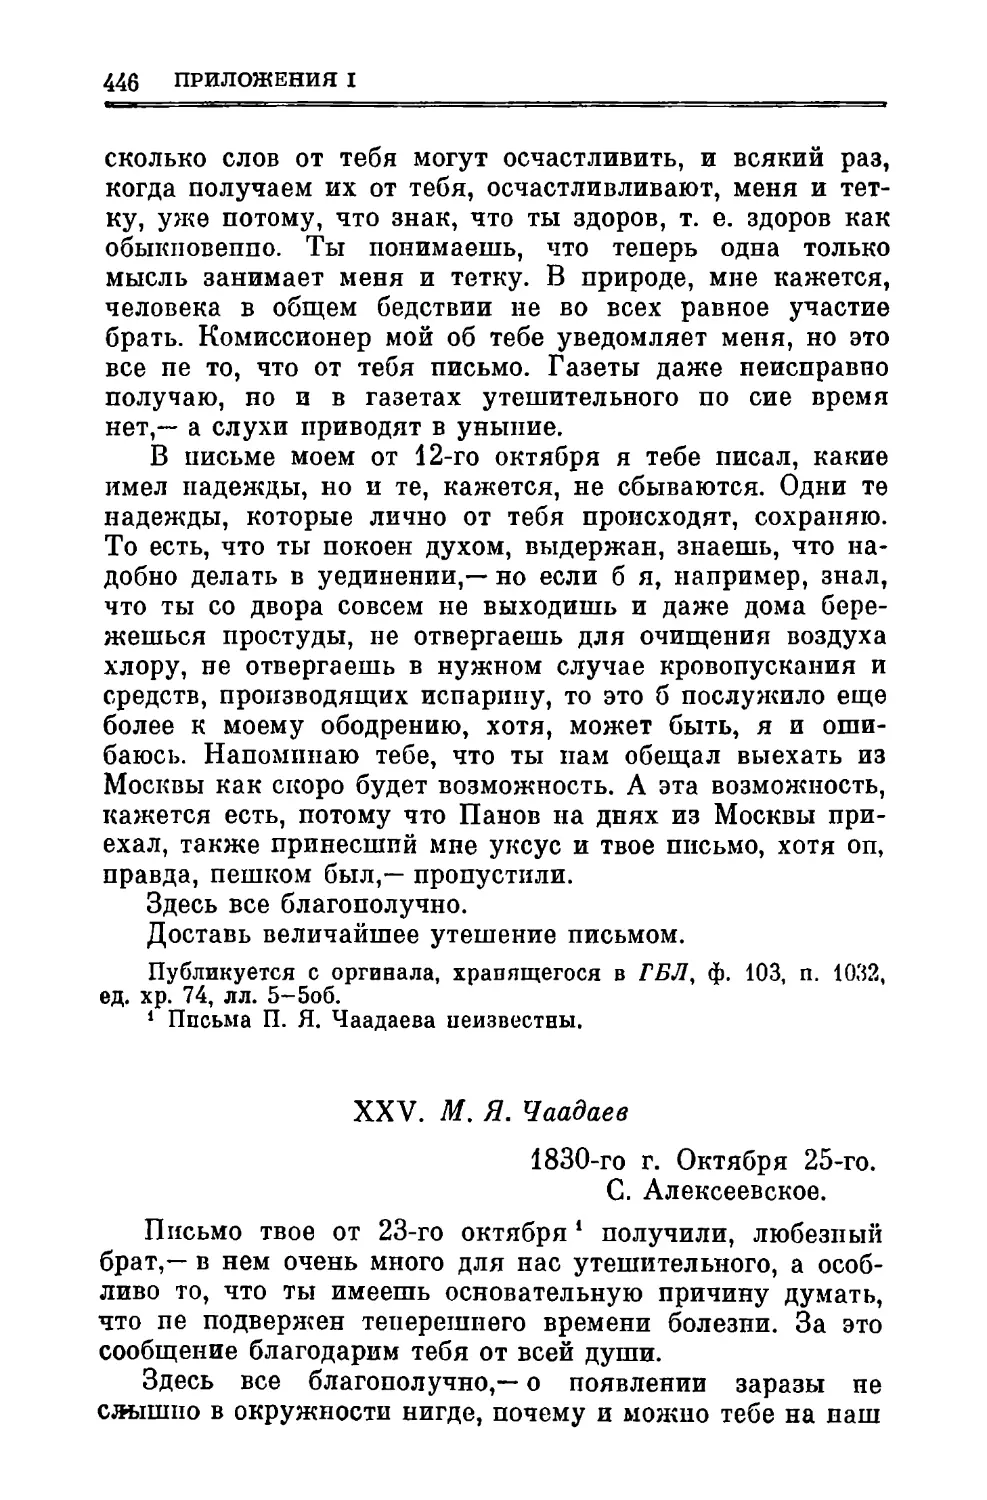 XXV. Чаадаев М.Я. 25.Х.1830